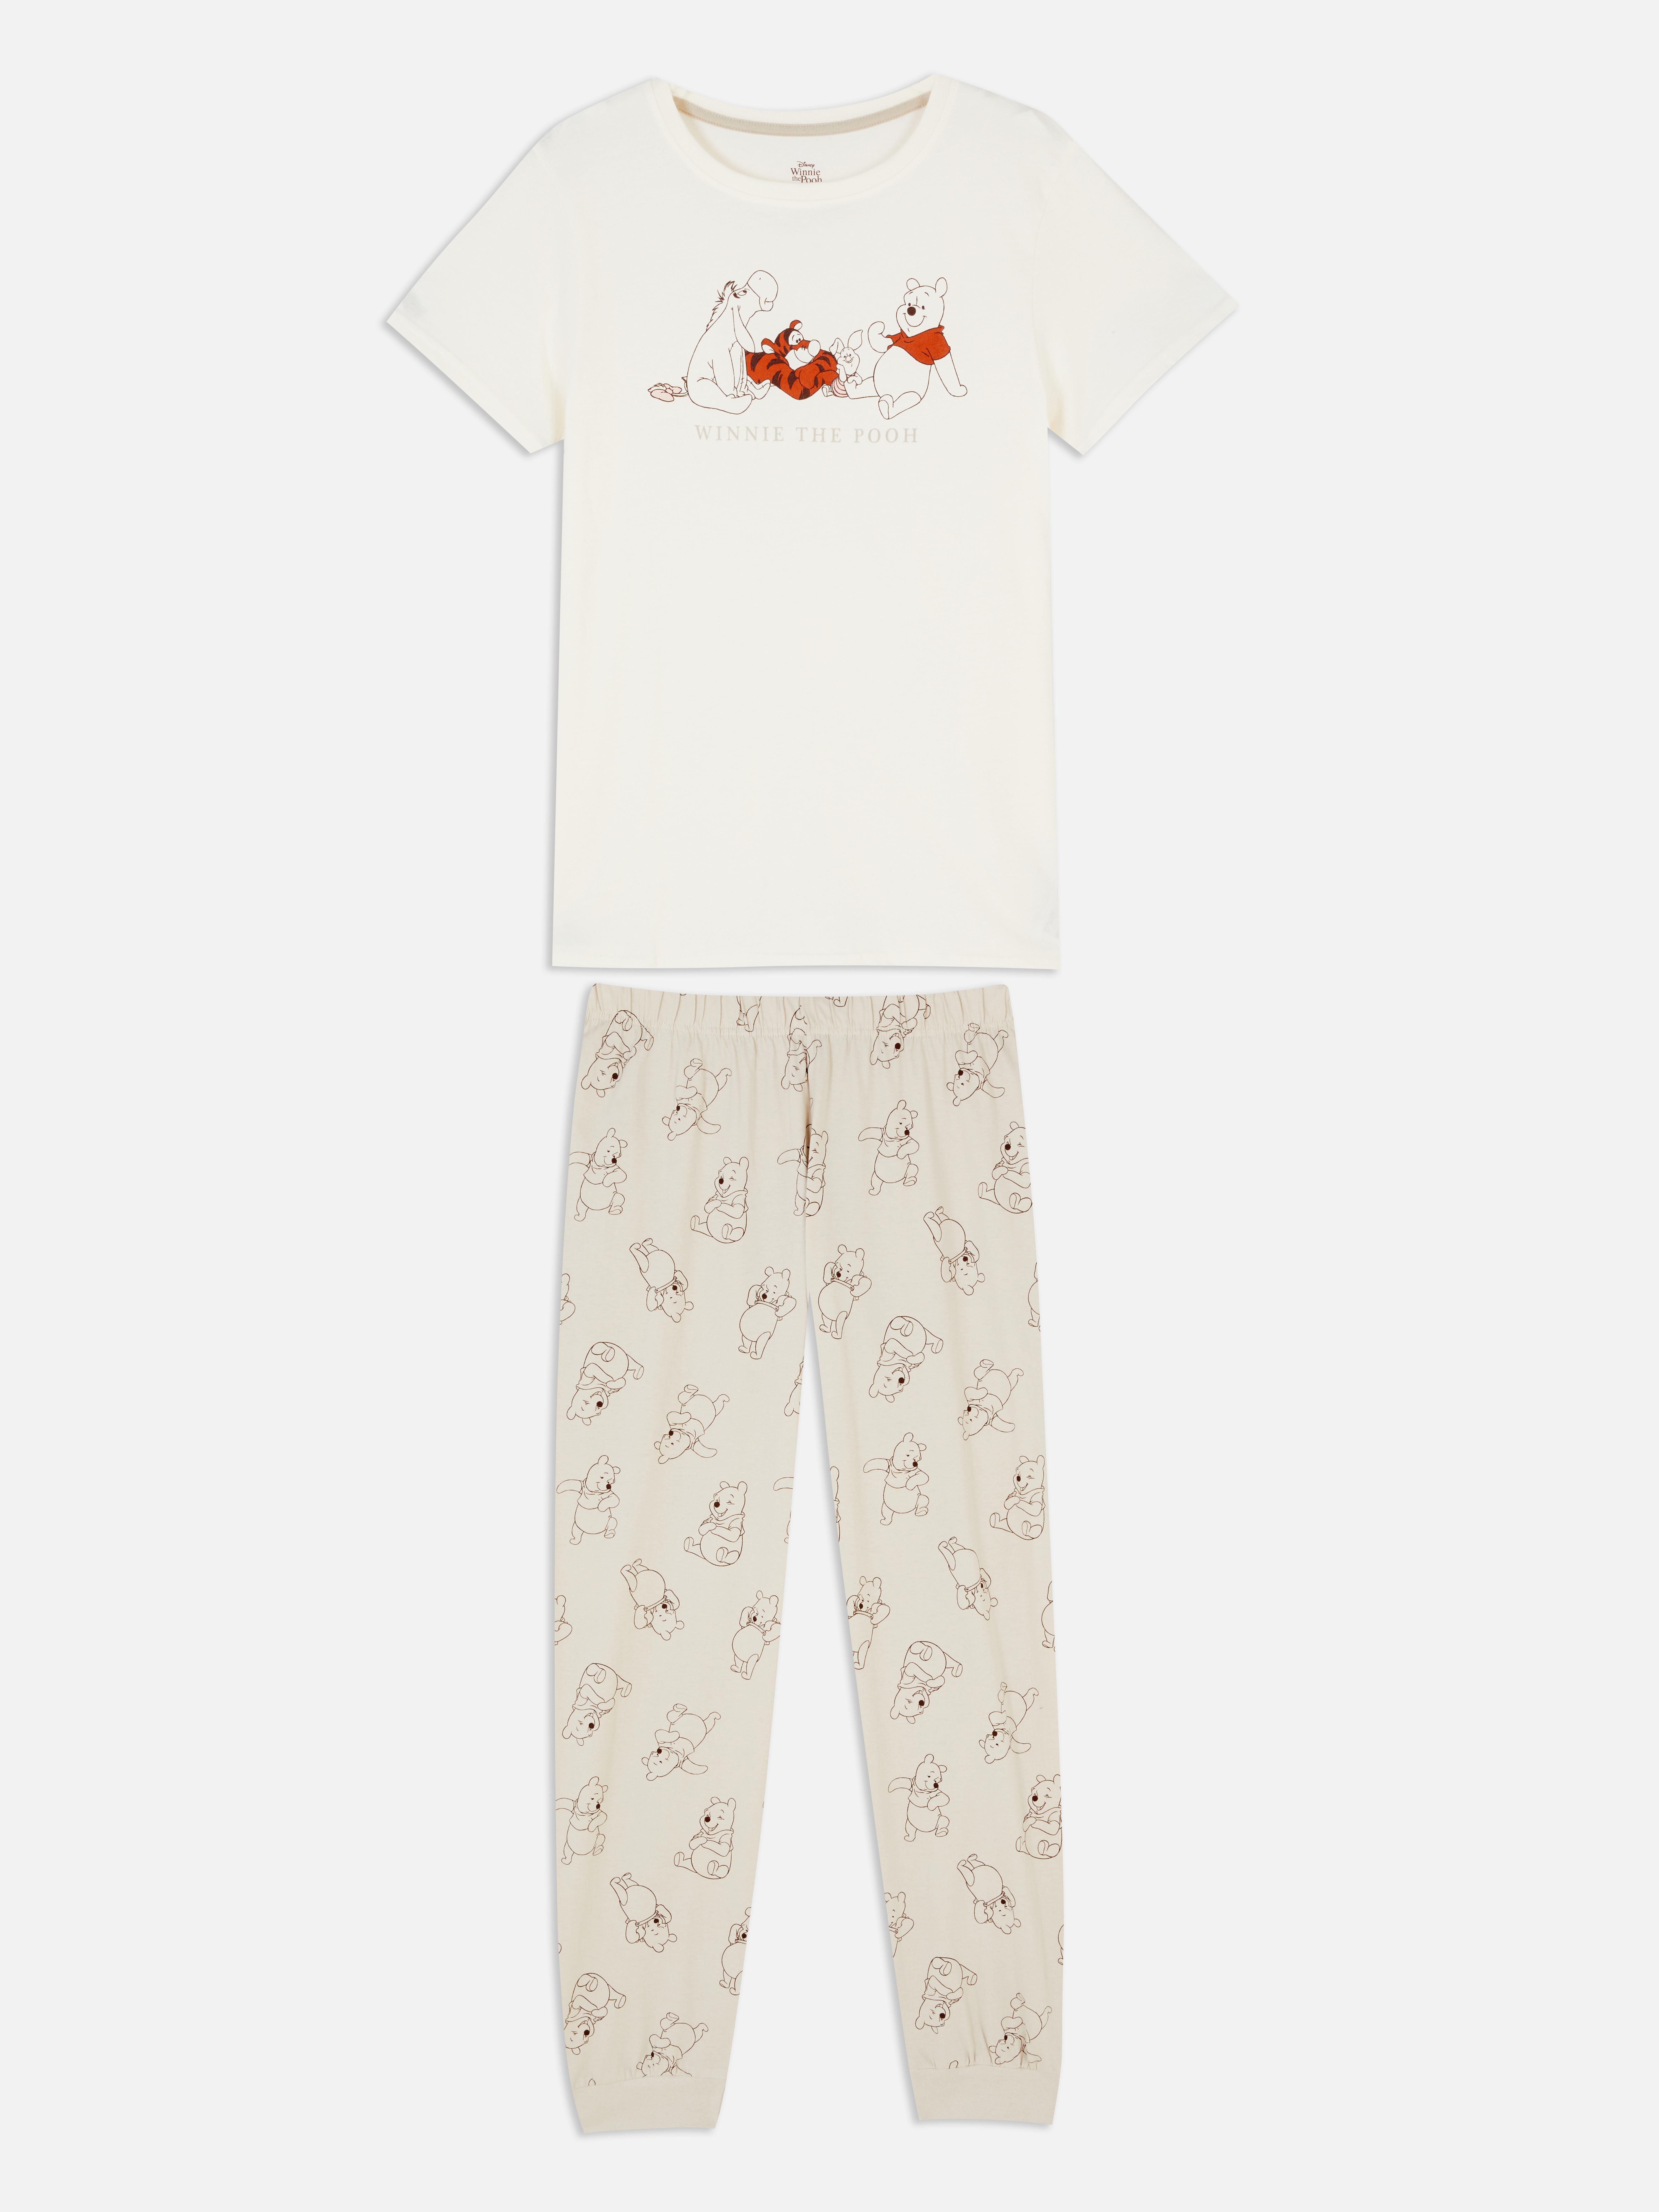 Disney Character Pyjama Set